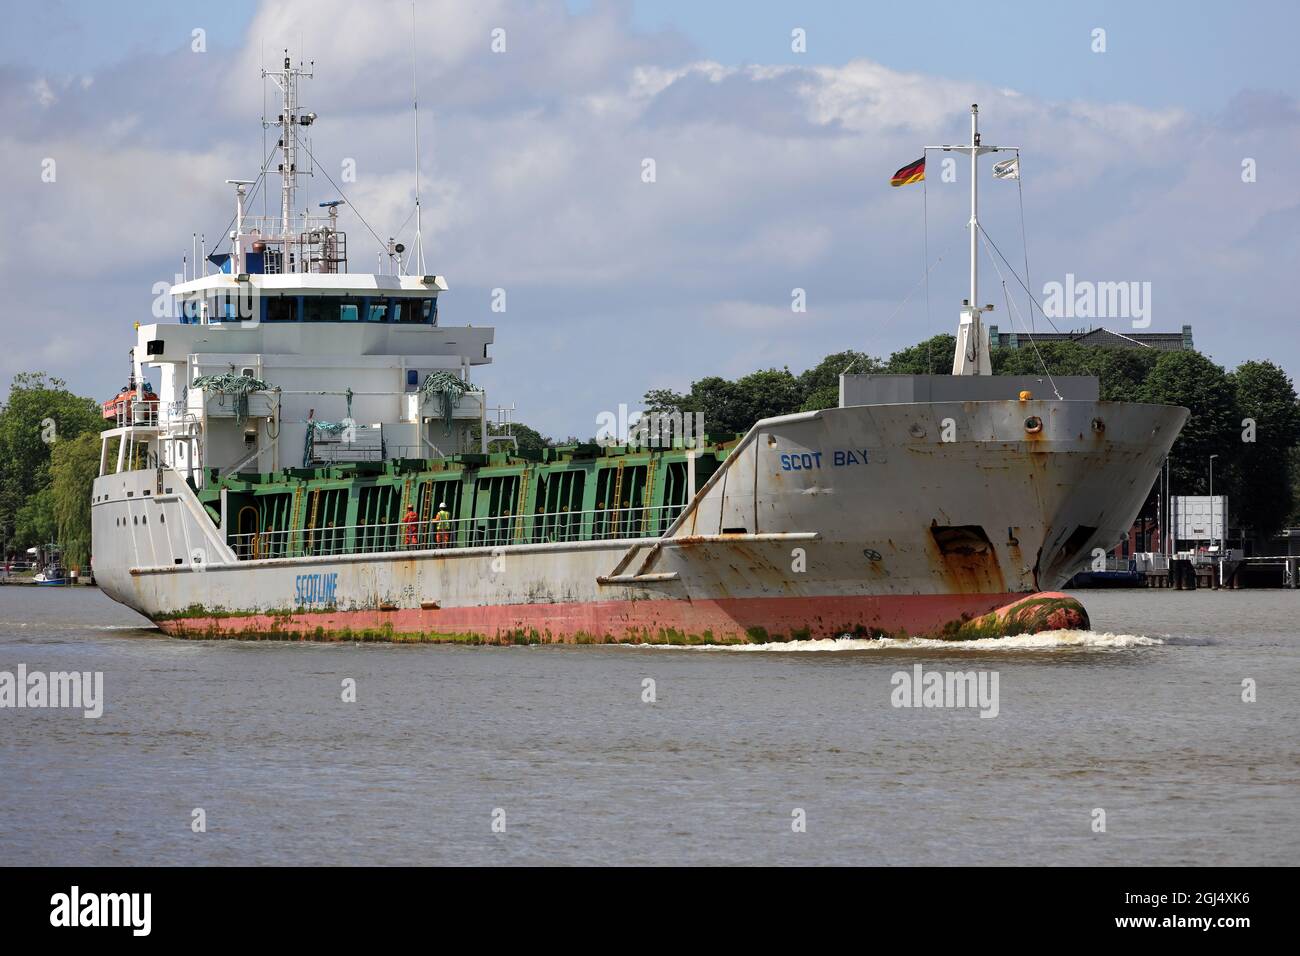 The cargo ship Scot Bay leaves the Brunsbüttel lock on June 15, 2021. Stock Photo